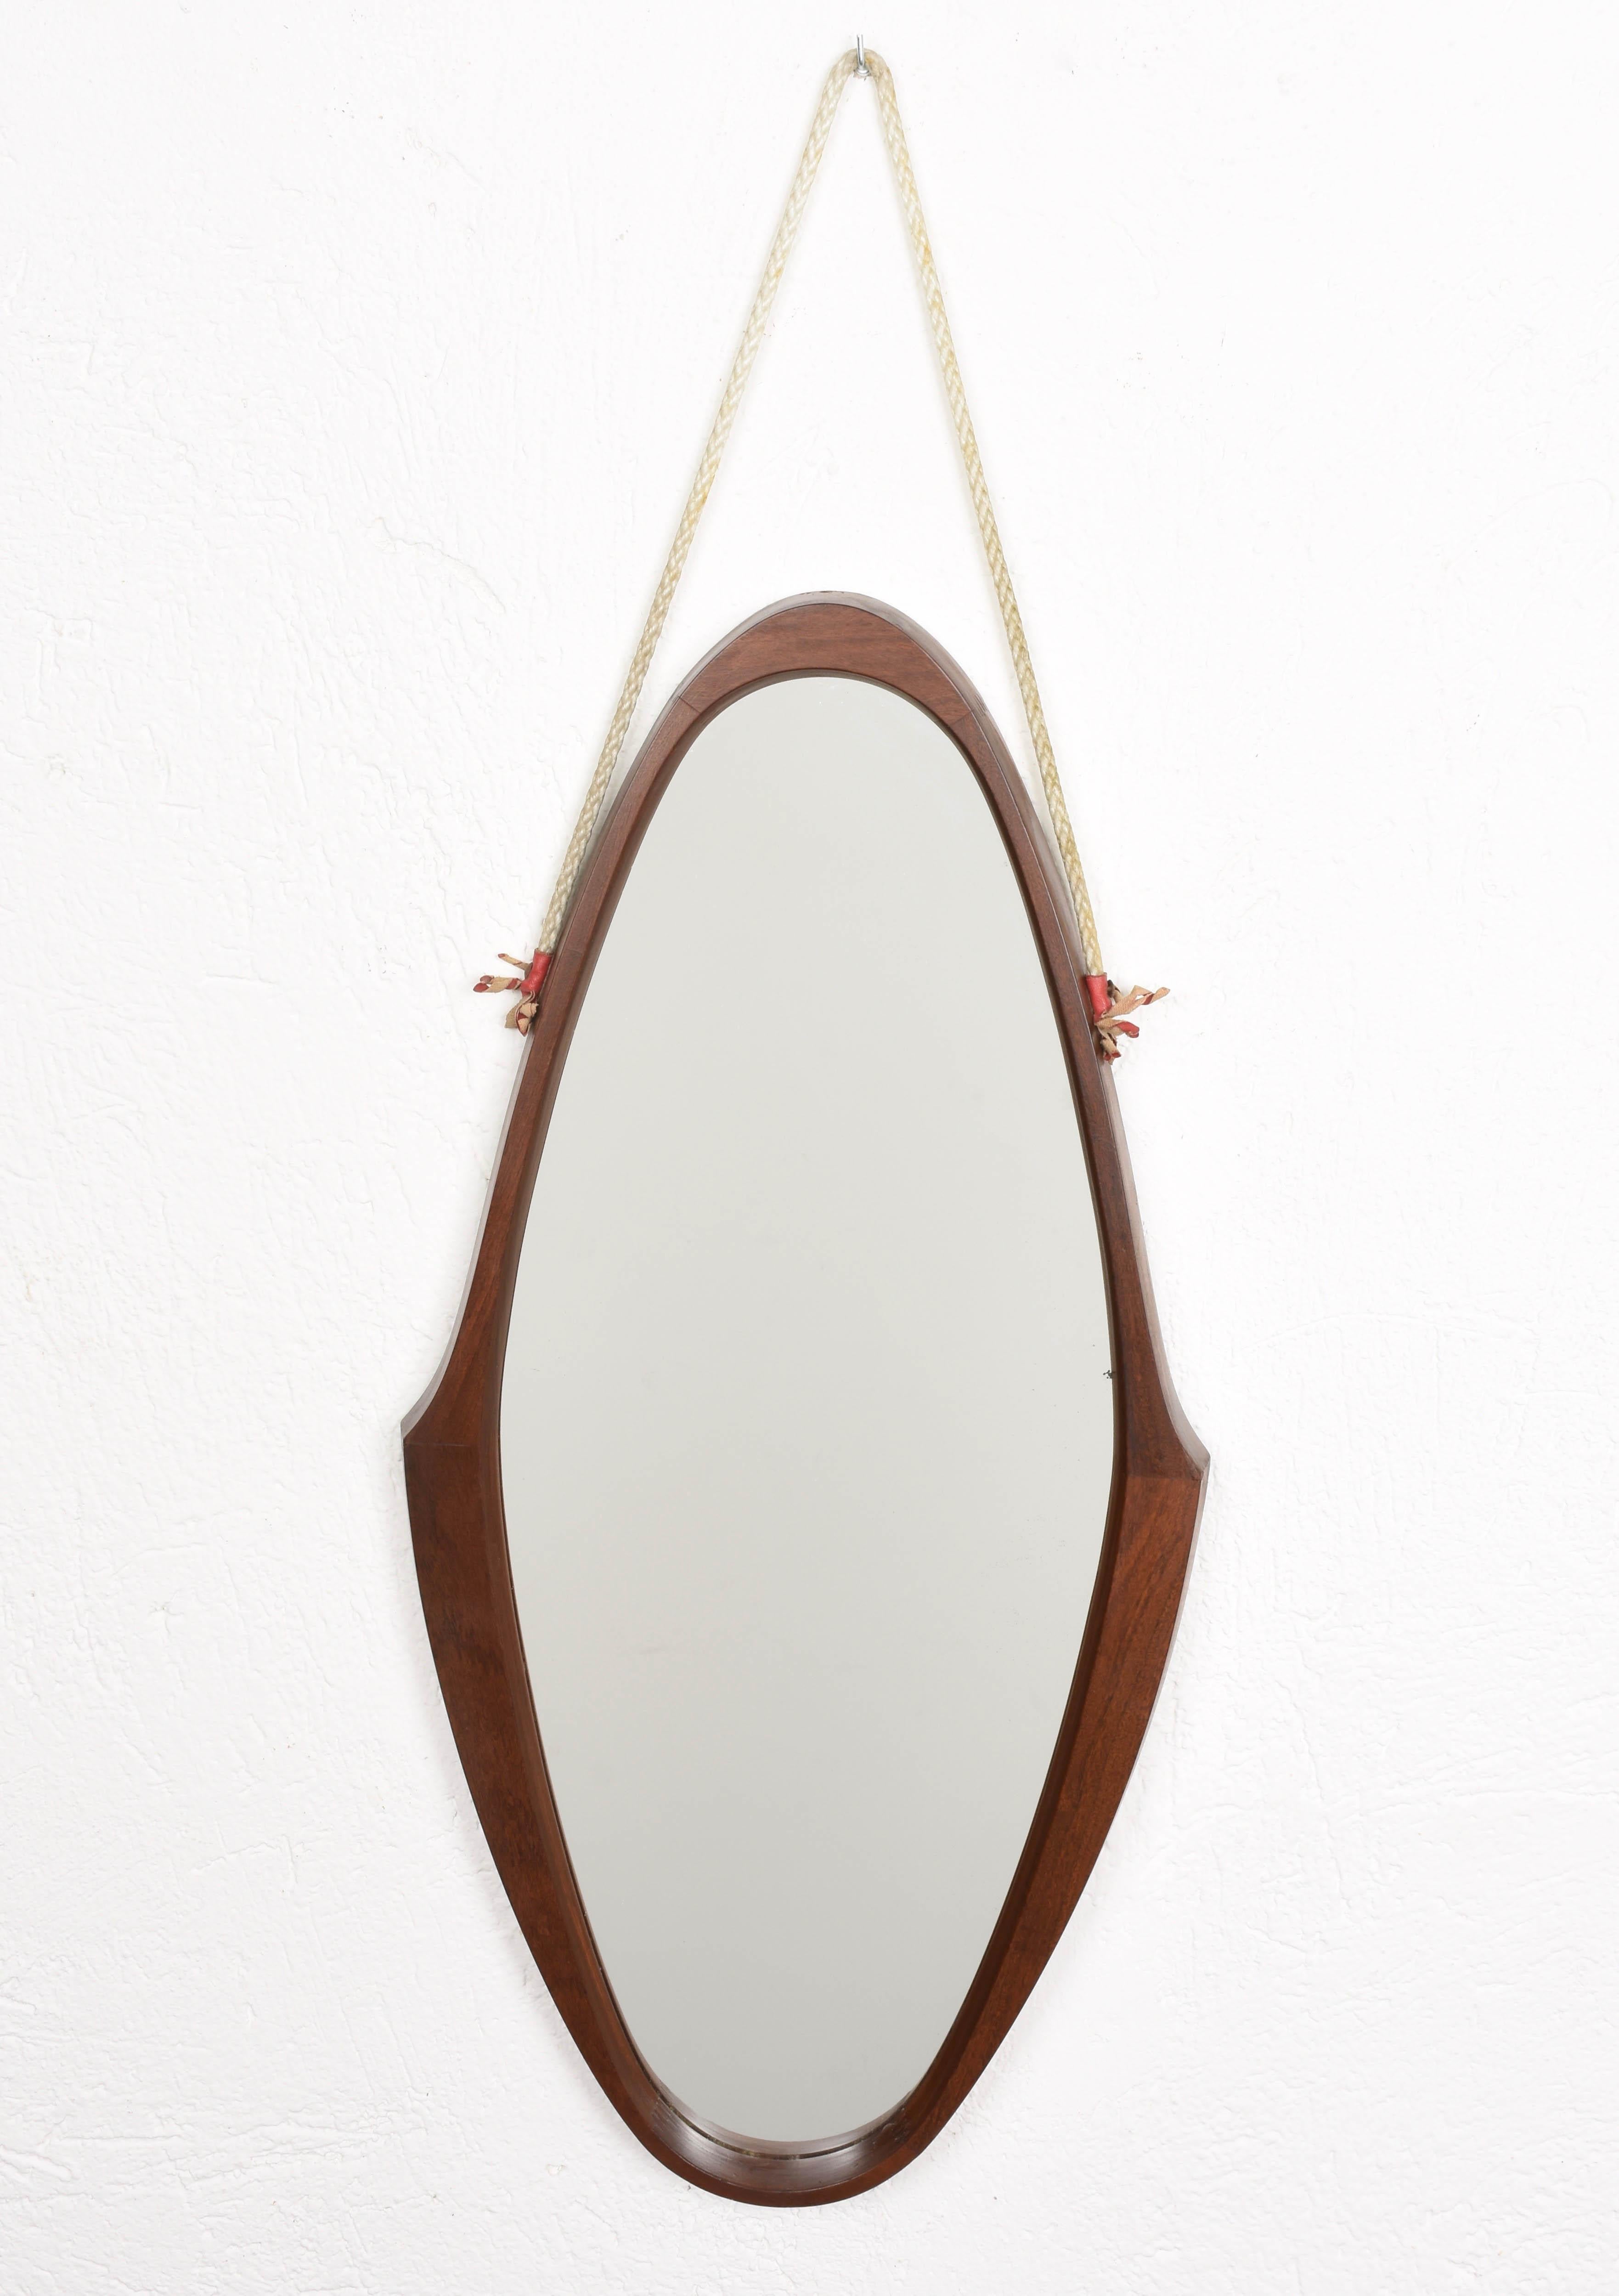 Midcentury Oval Teak, Nylon Rope and Leather Italian Wall Framed Mirror, 1960s 1